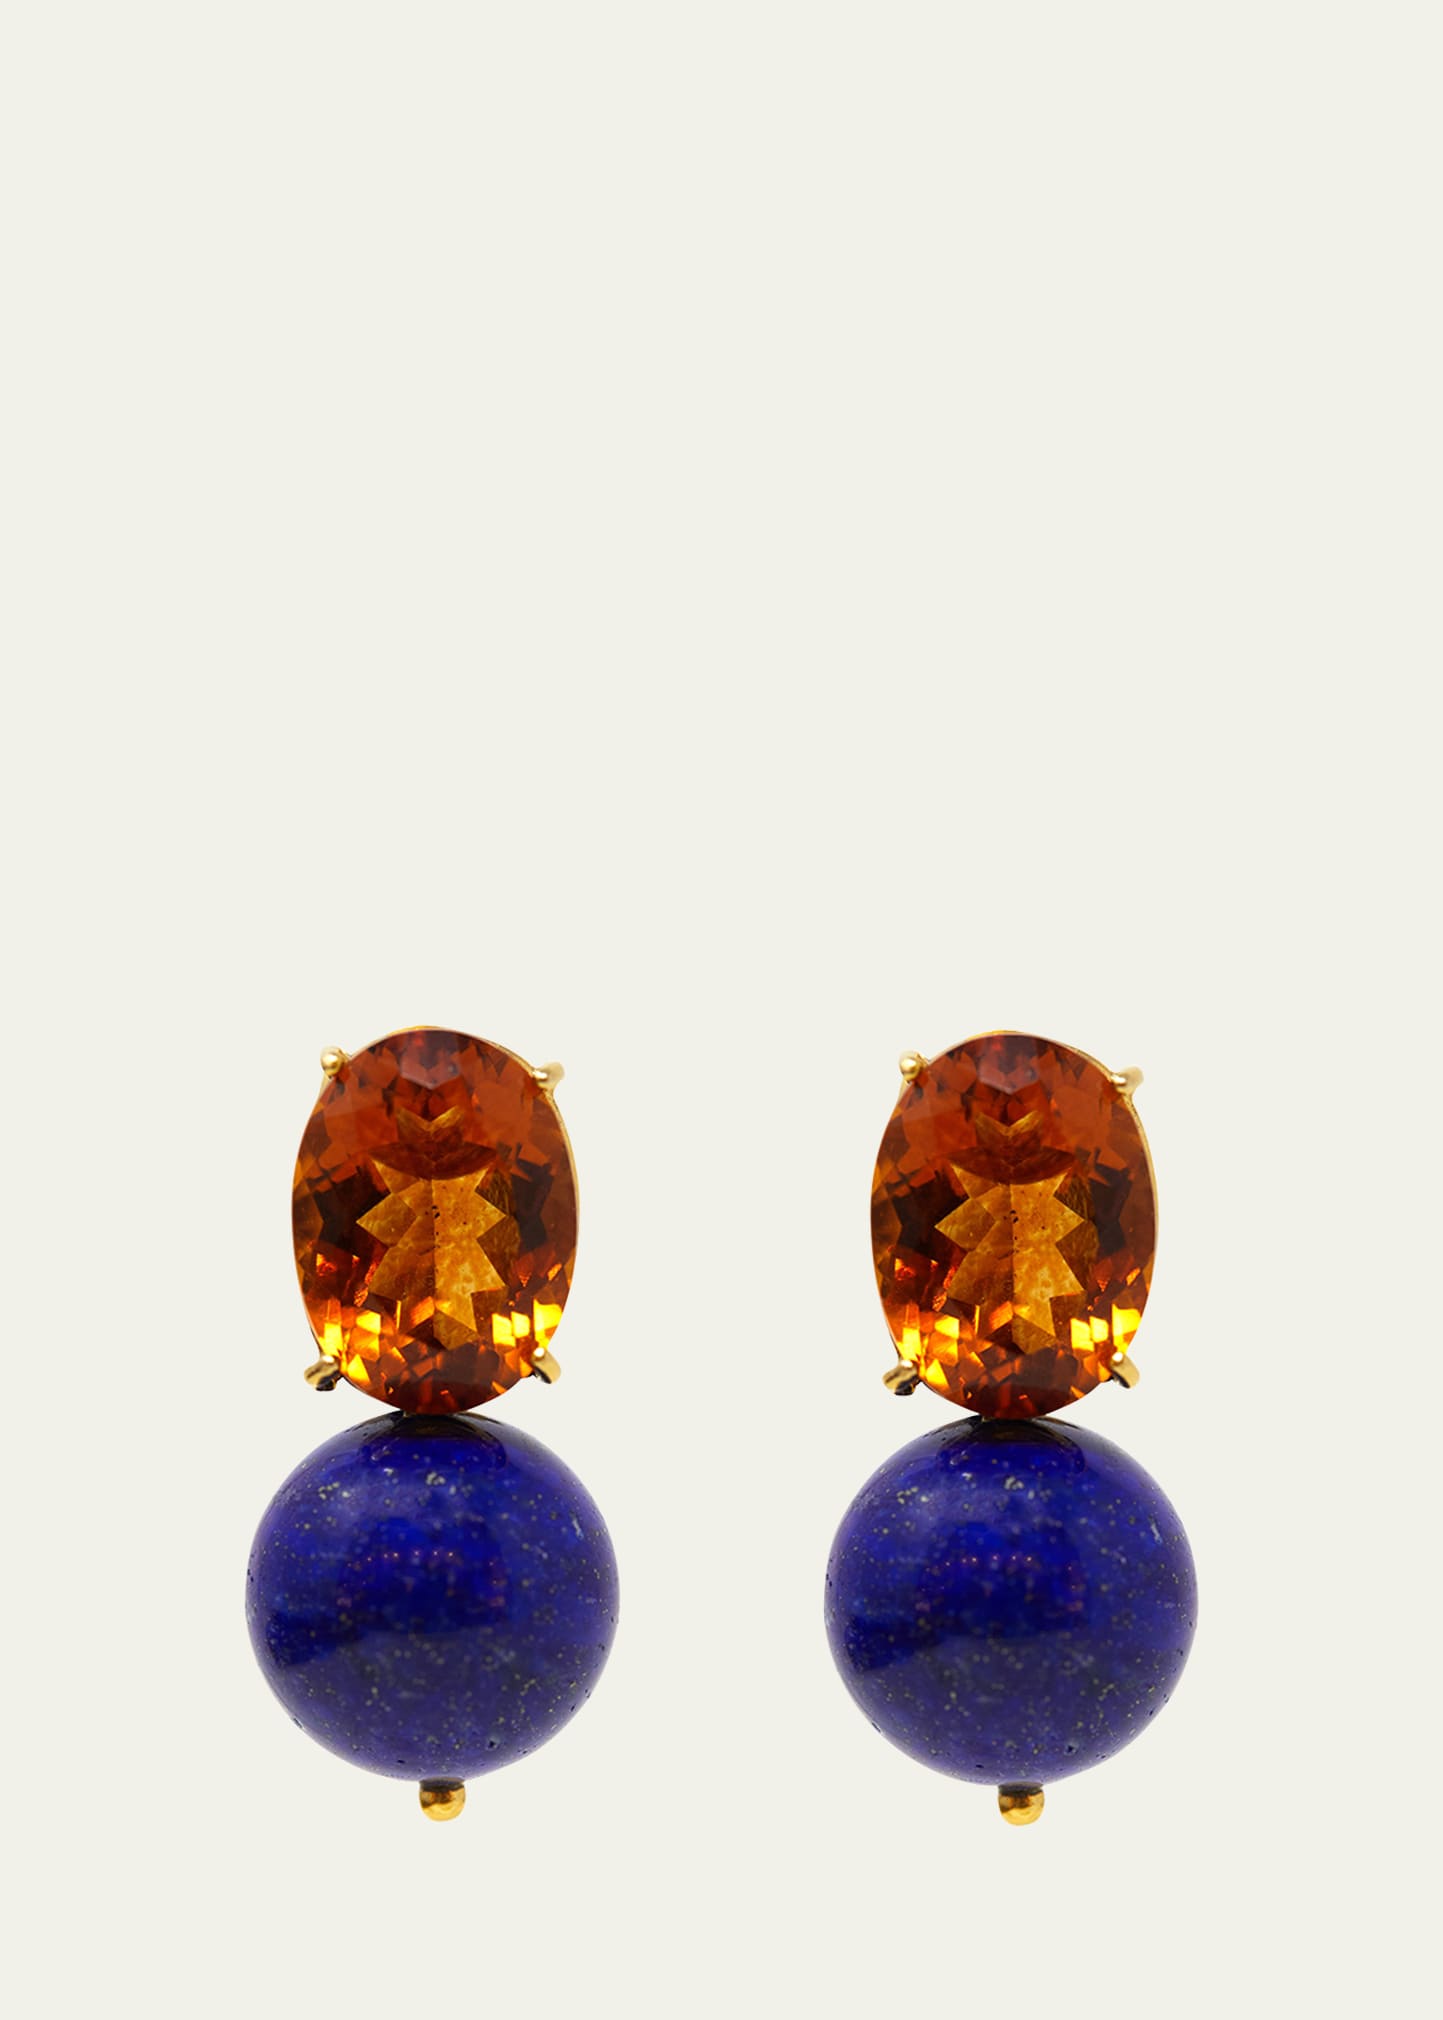 Grazia And Marica Vozza 14k Yellow Gold Stud Earrings With Lapis Lazuli And Citrine Quartz In Multi